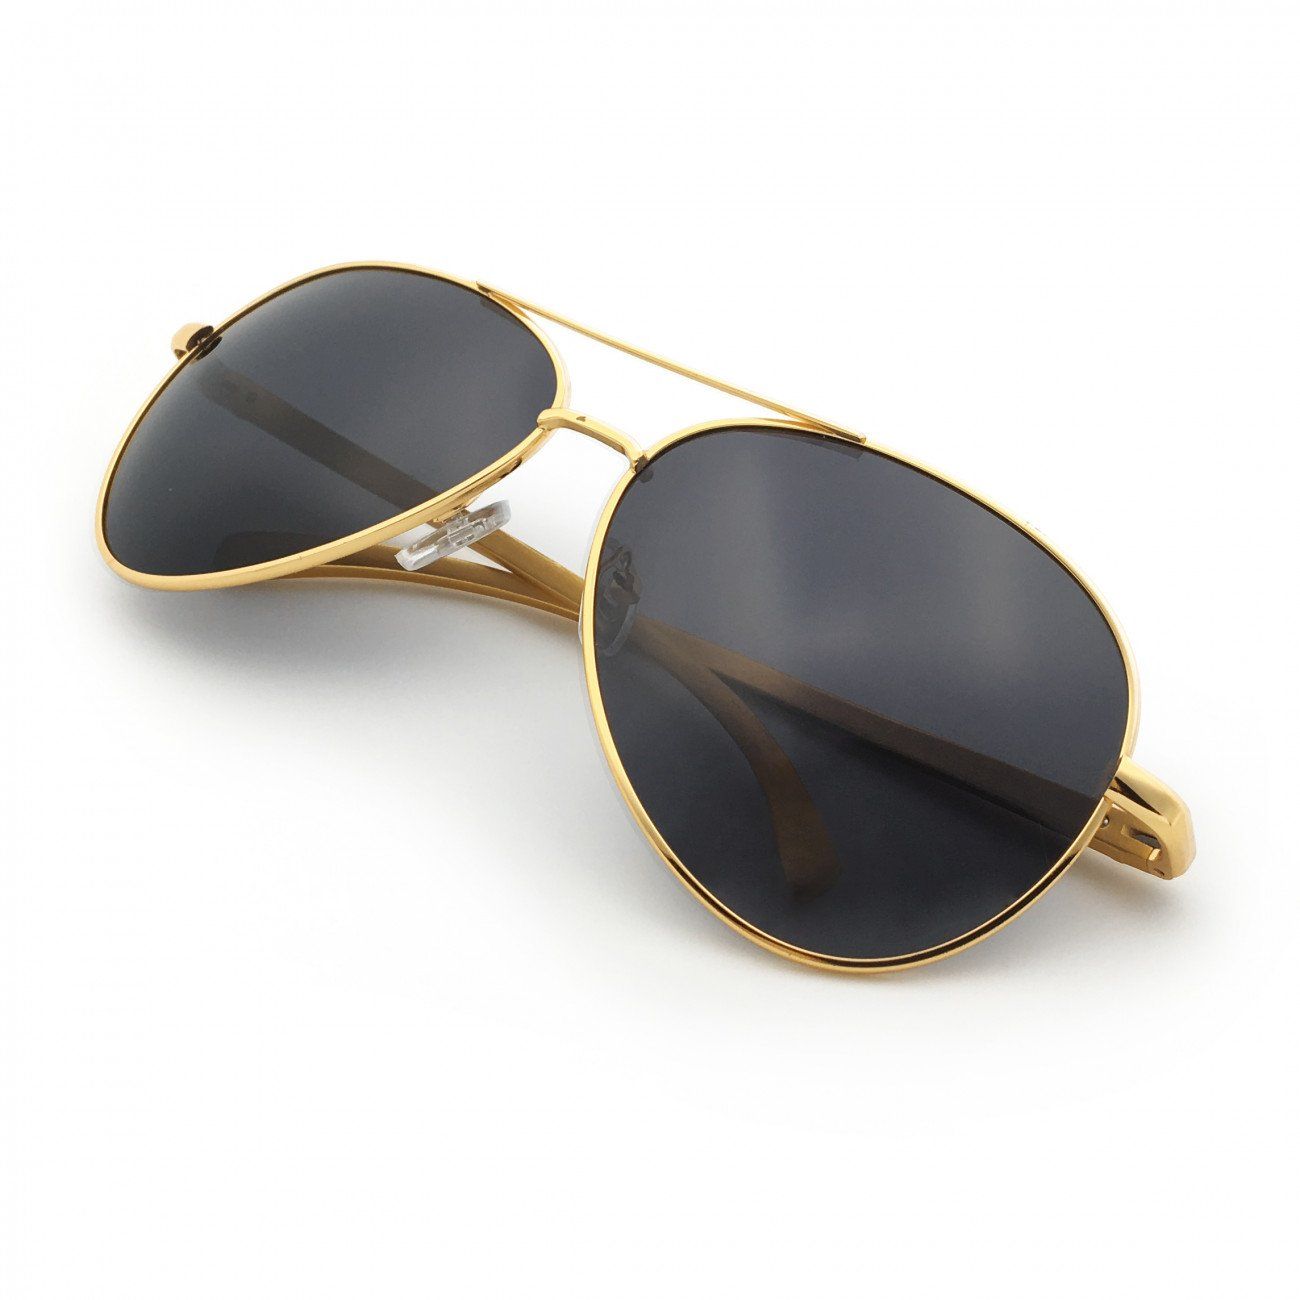 J+S Ultra Sleek Sports Aviator Sunglasses, Polarized, 100% UV